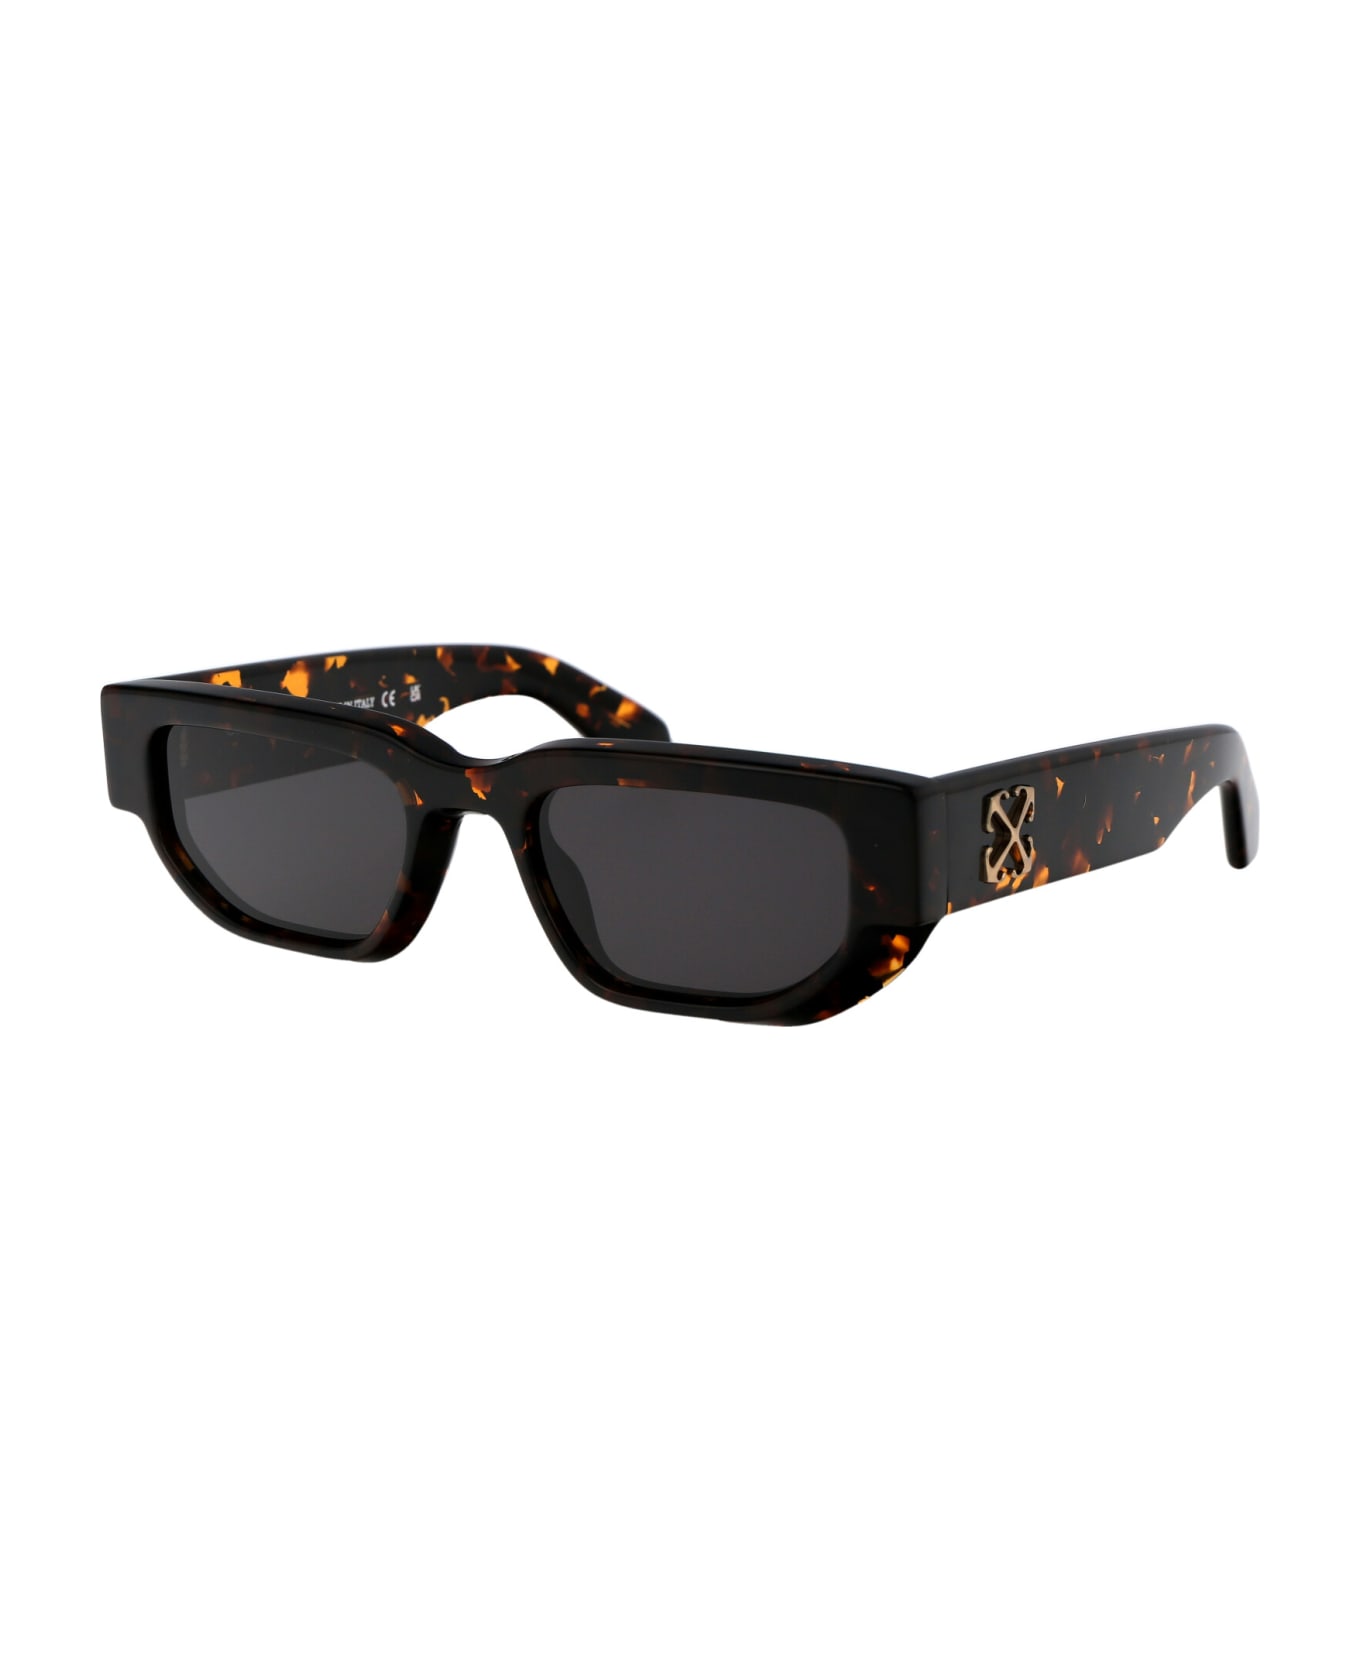 Off-White Greeley Sunglasses - 6007 HAVANA  